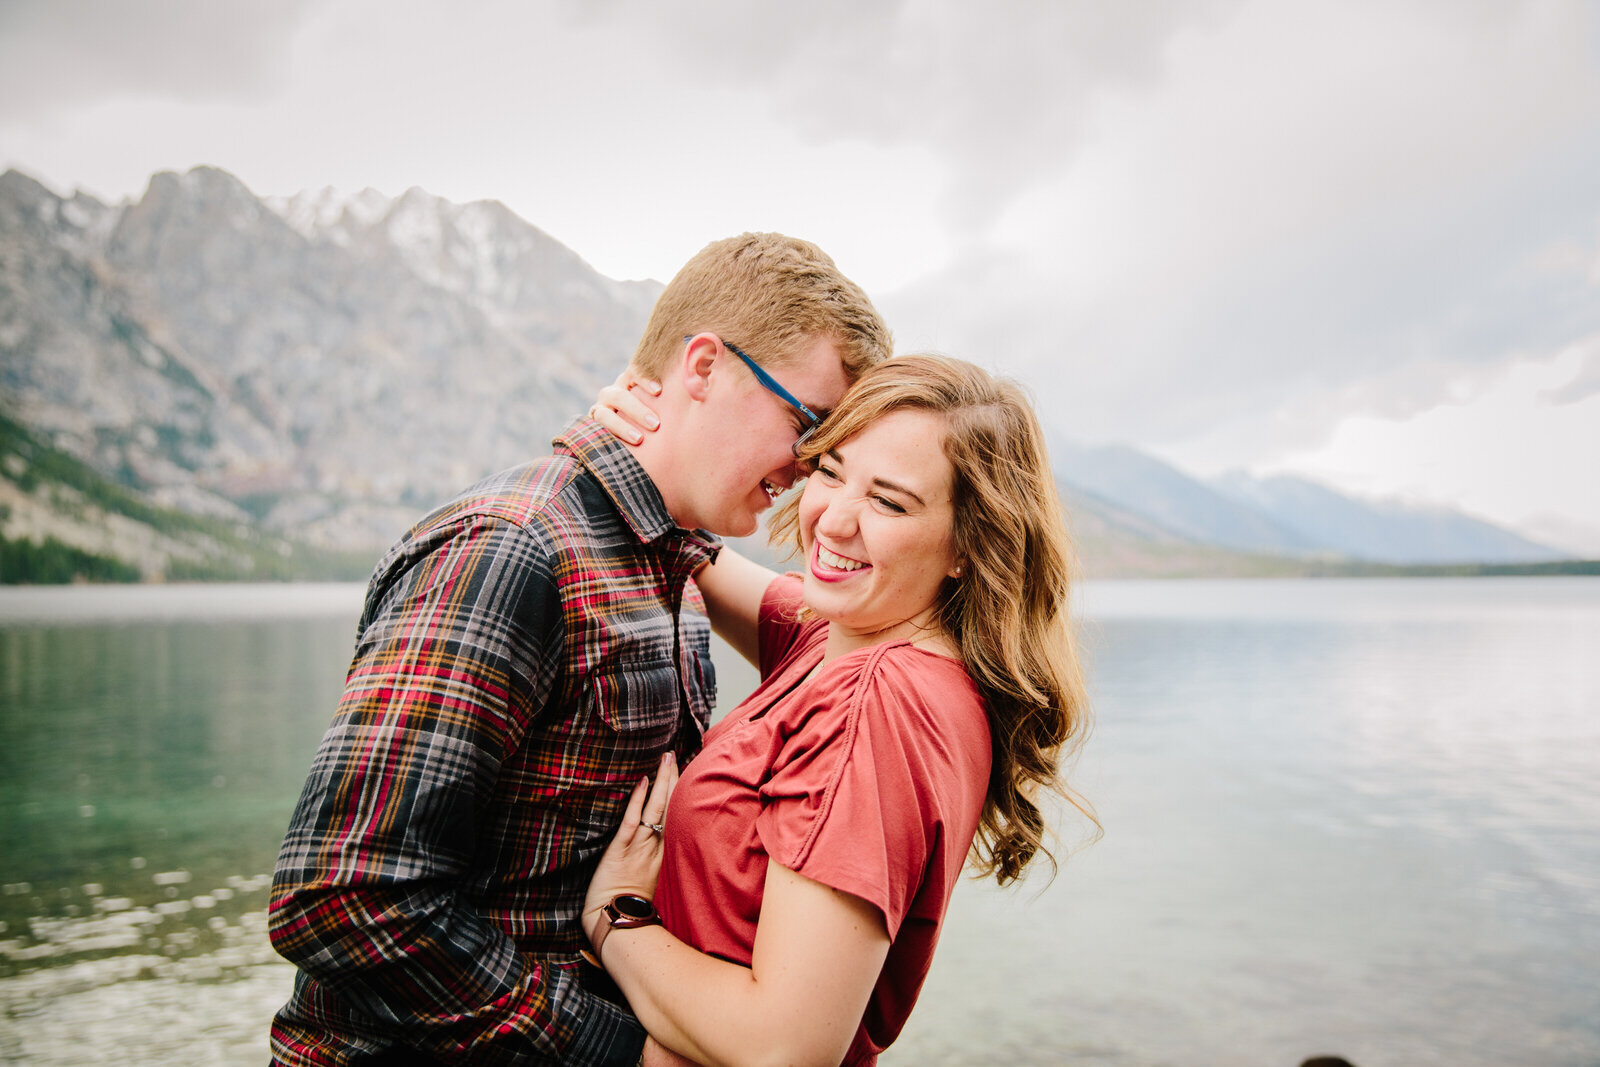 Jackson Hole photographers captures couple embracing during engagement portraits